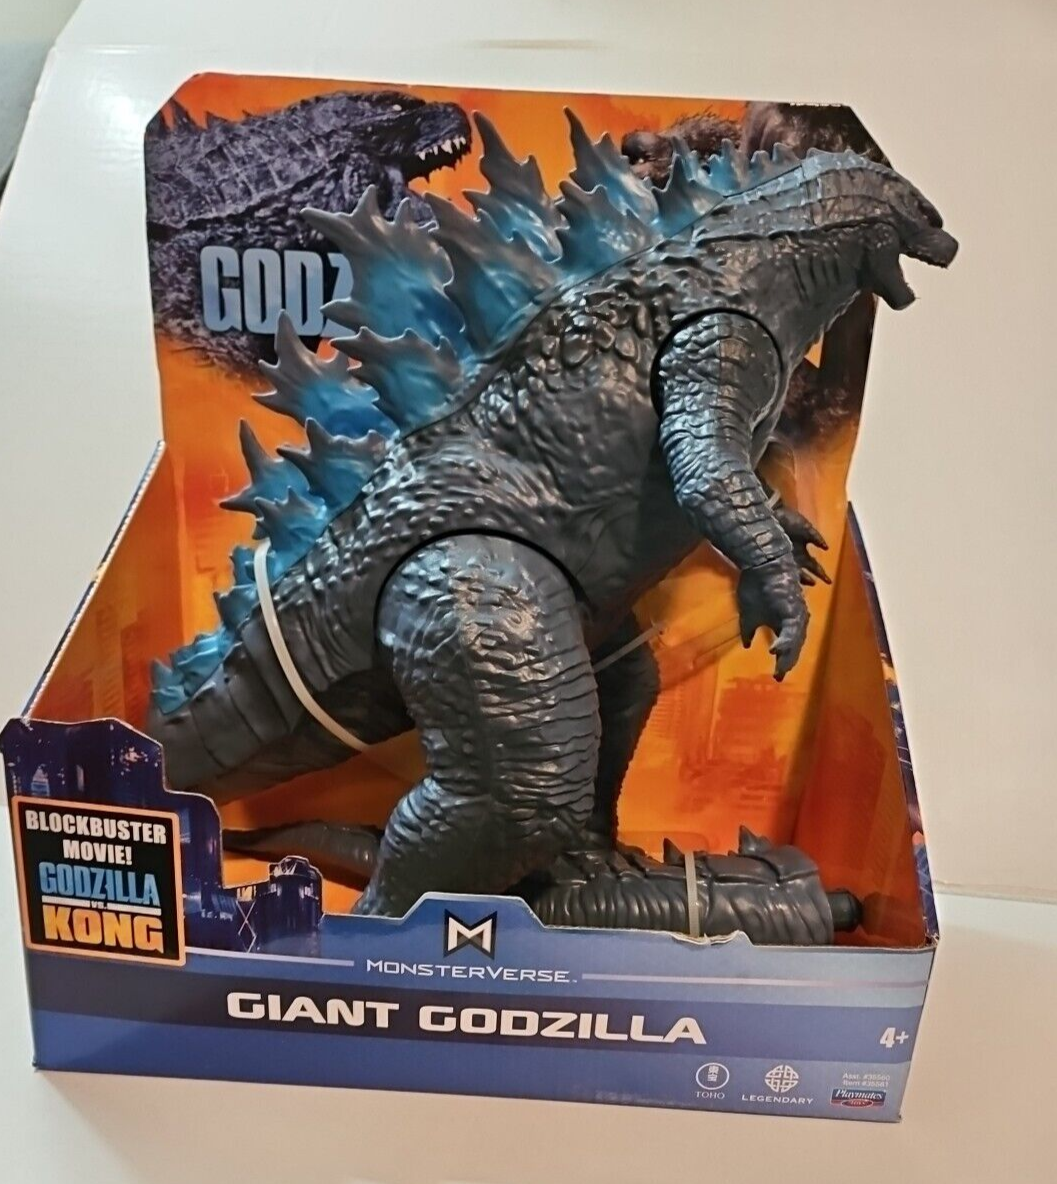 Godzilla vs Kong Monsterverse 11” Giant Godzilla Figure Playmates Toy New Playmates 35561 - фотография #8